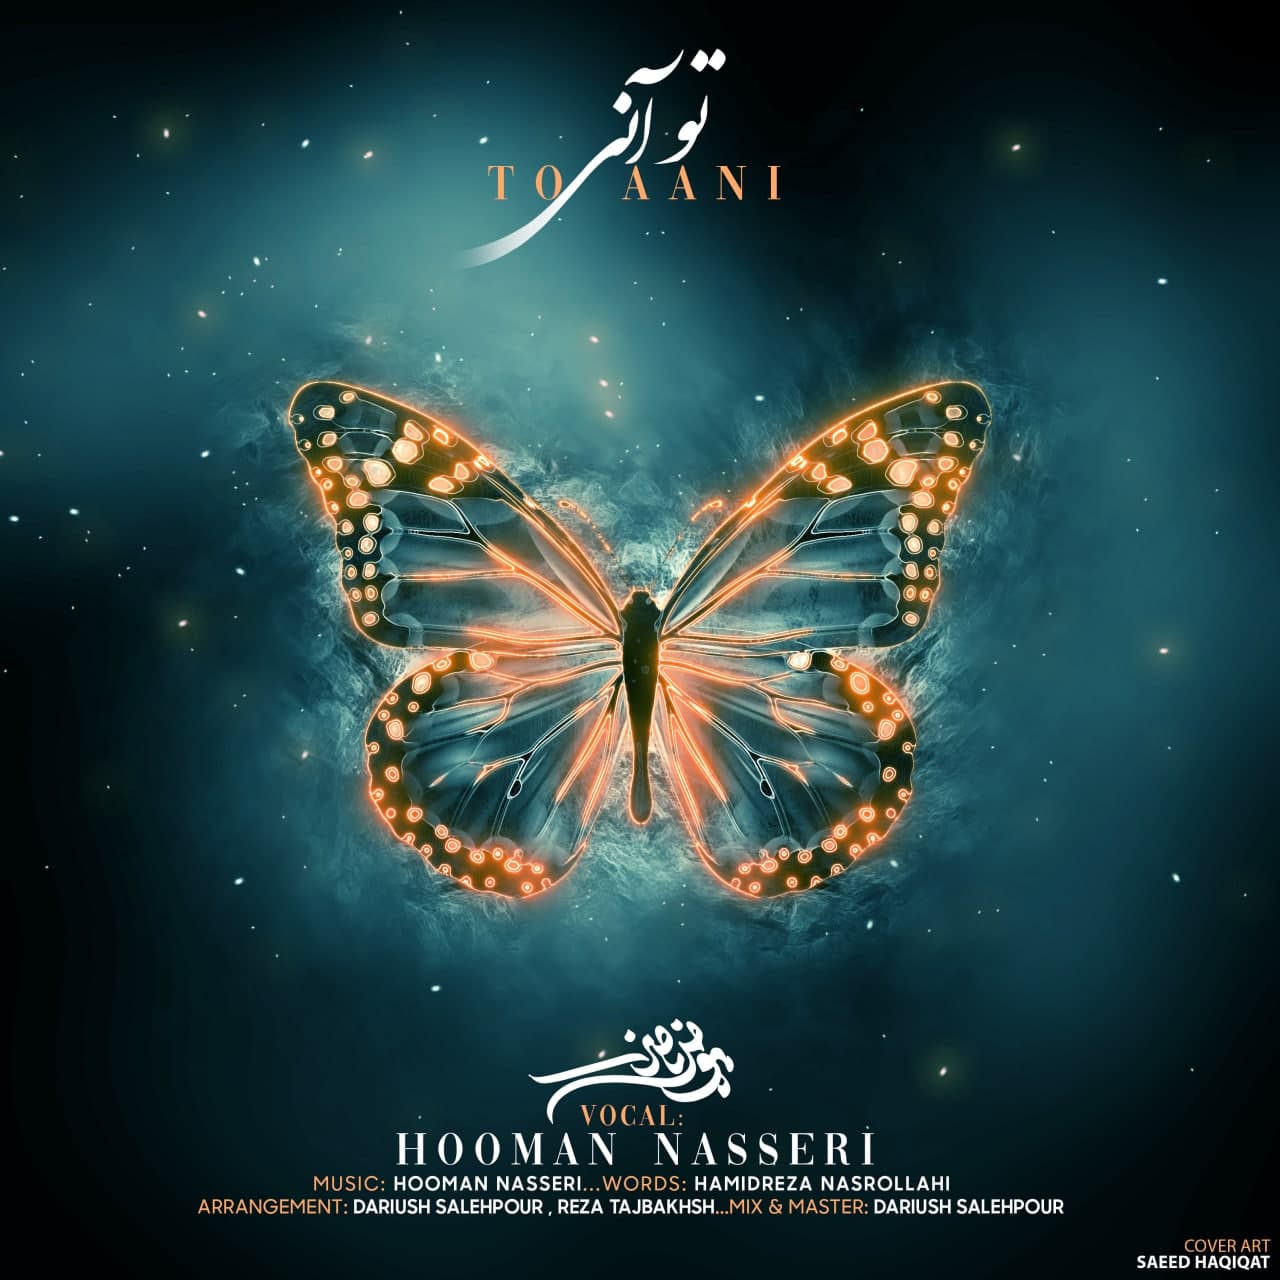 Hooman Nasseri – To Aani